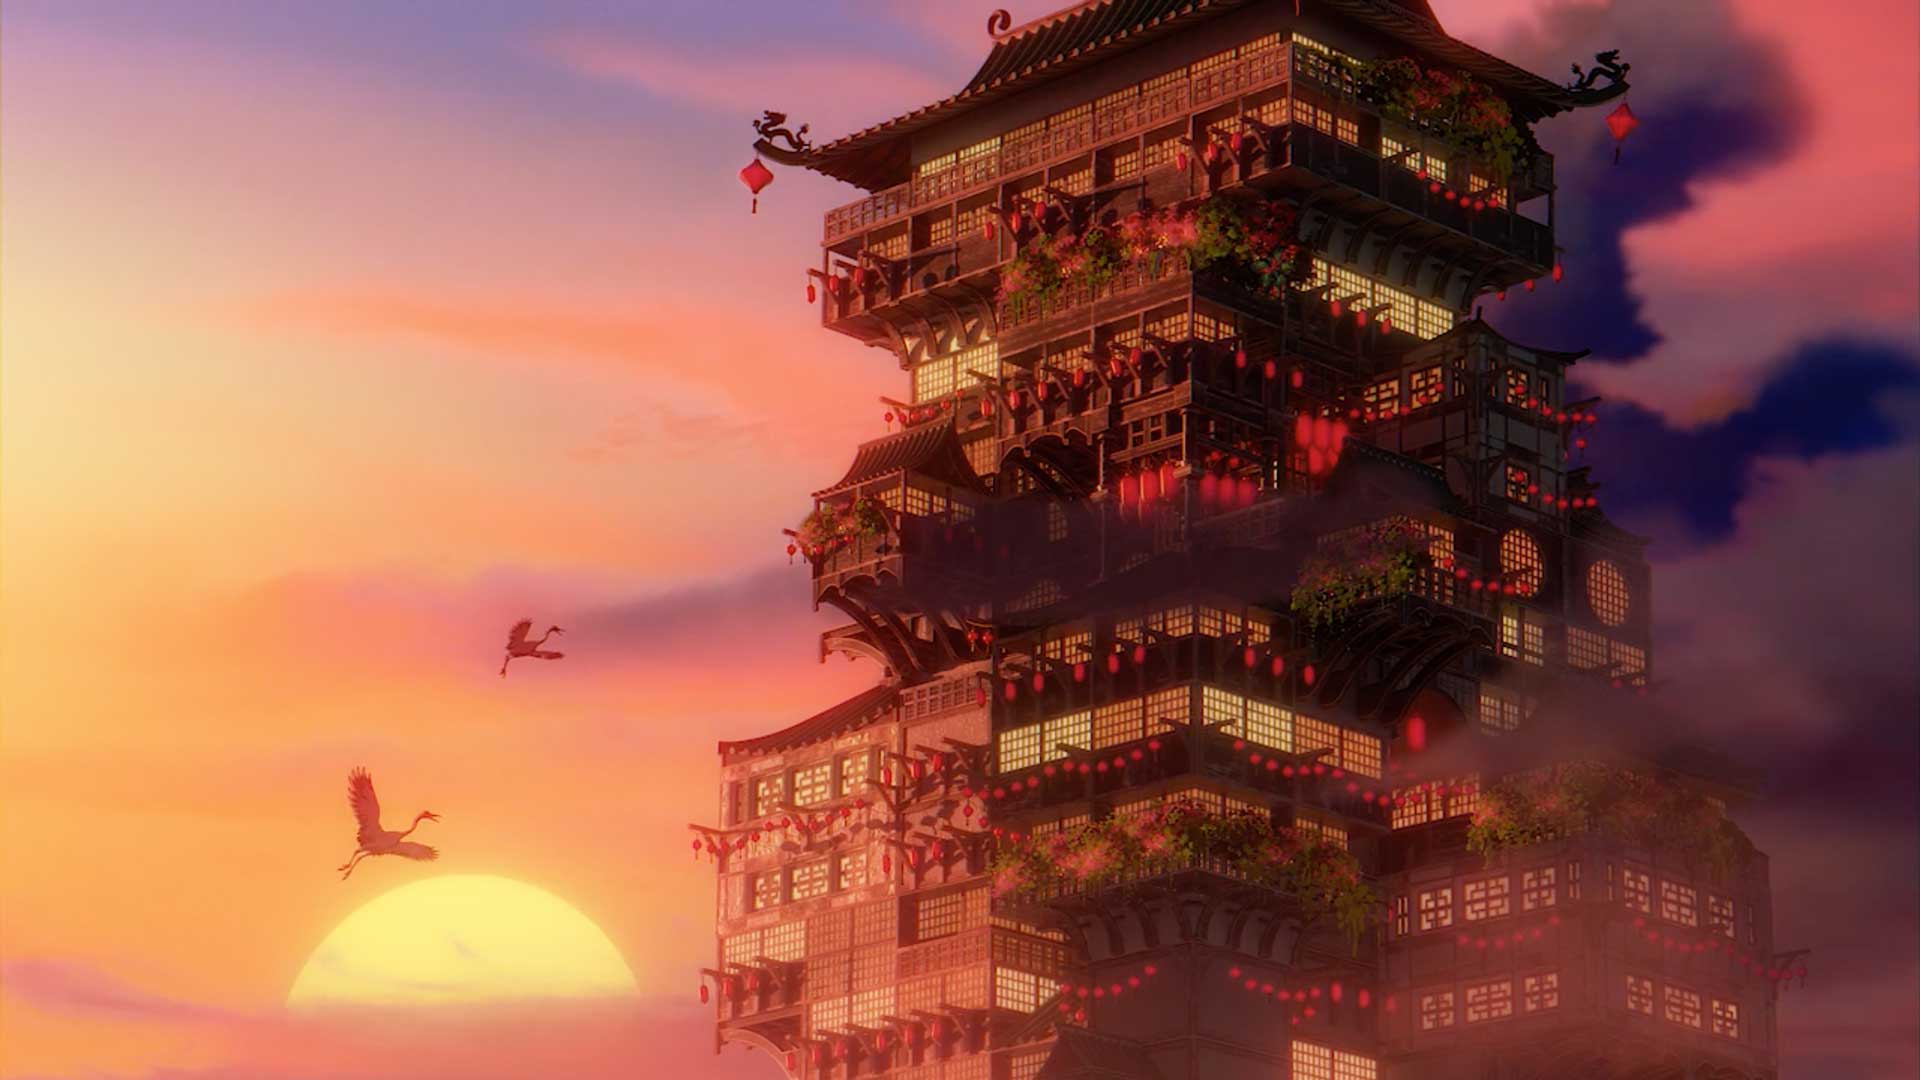 Capsule House The Tale of Kitsune animated teaser Future Power Station | STASH MAGAZINE